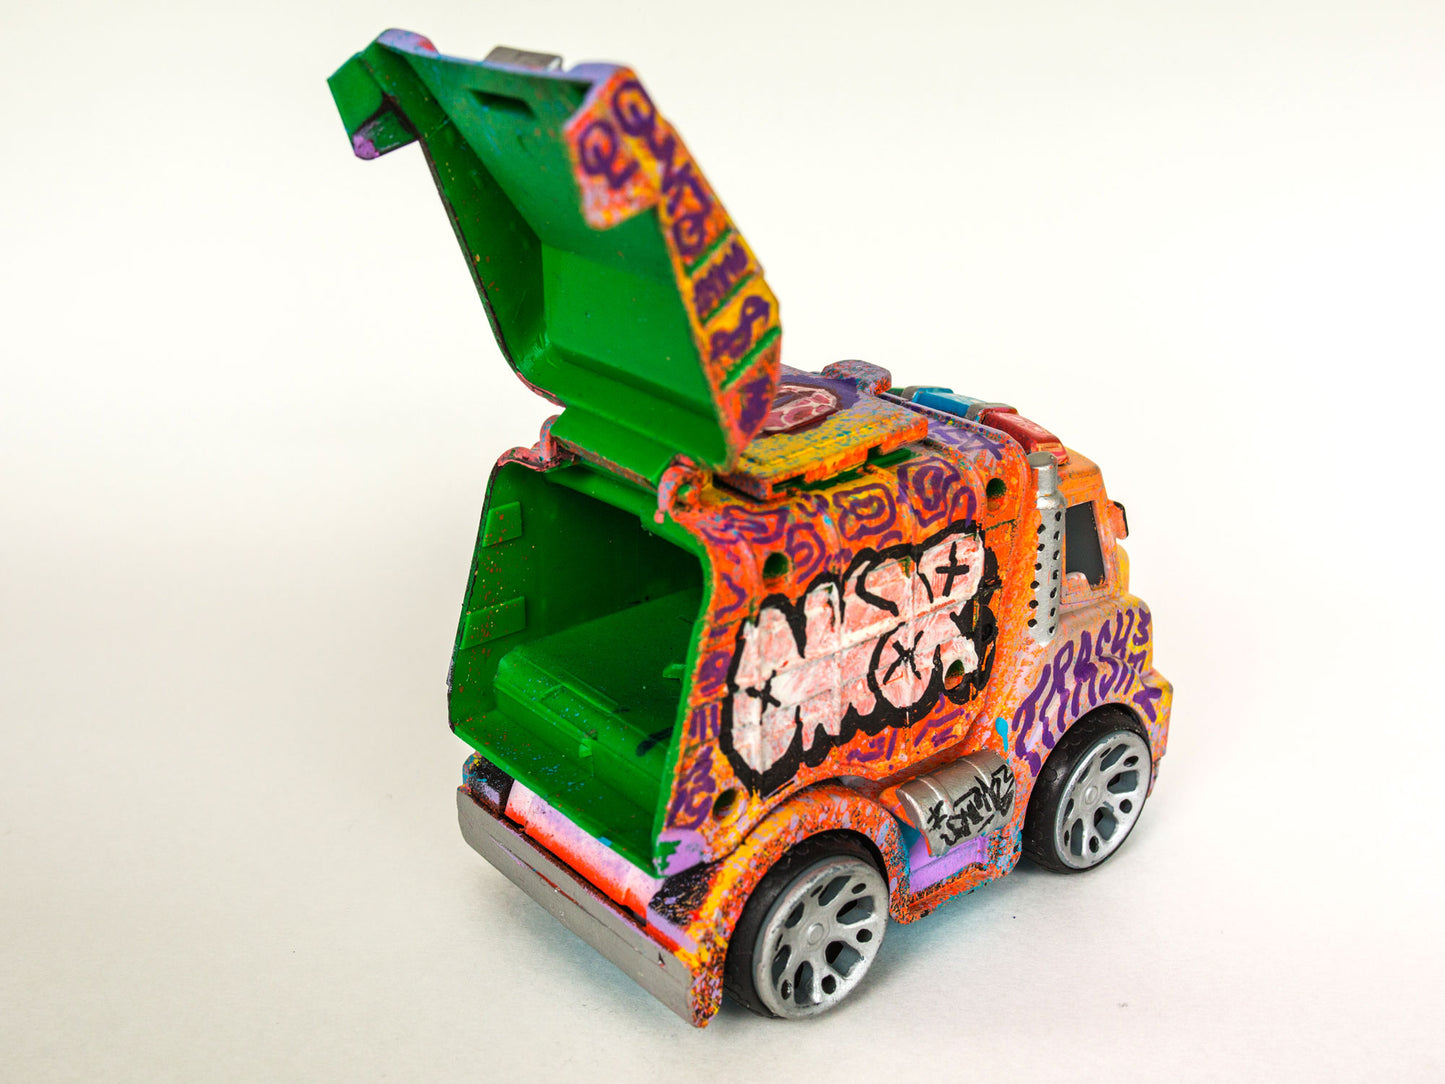 Art Object Toy - "Garbage Truck"